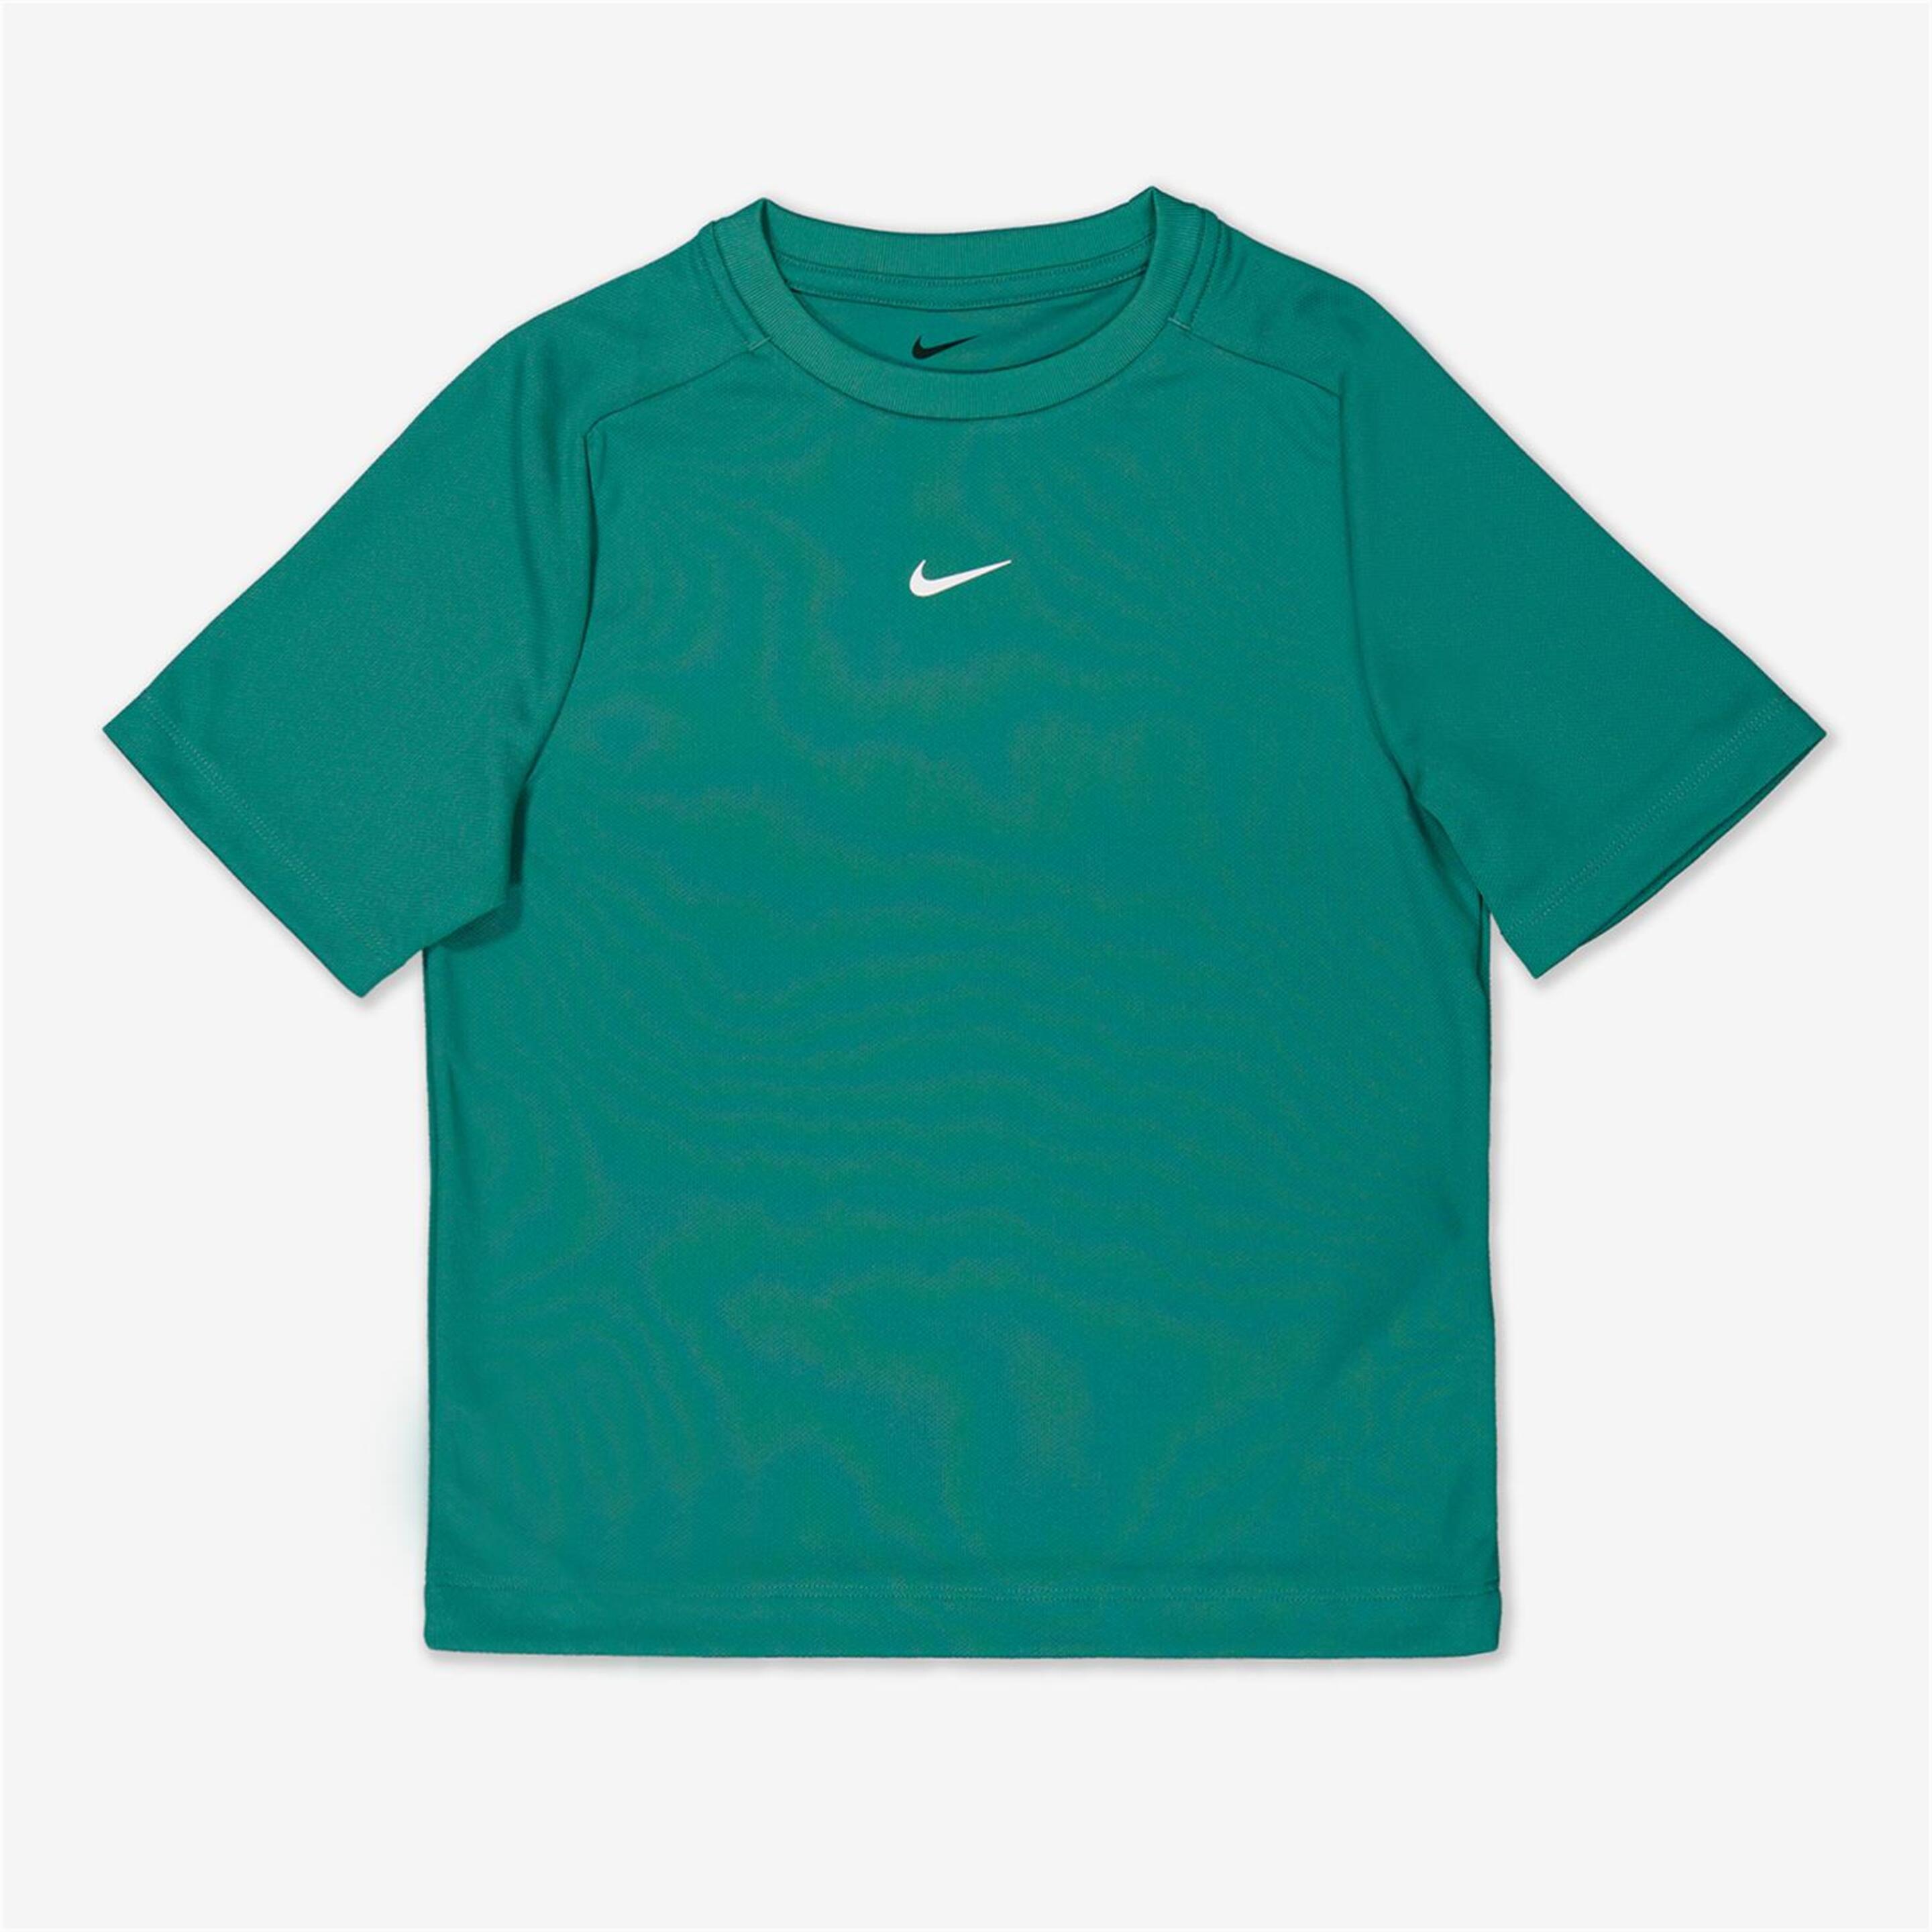 Camiseta Nike - verde - Camiseta Running Hombre